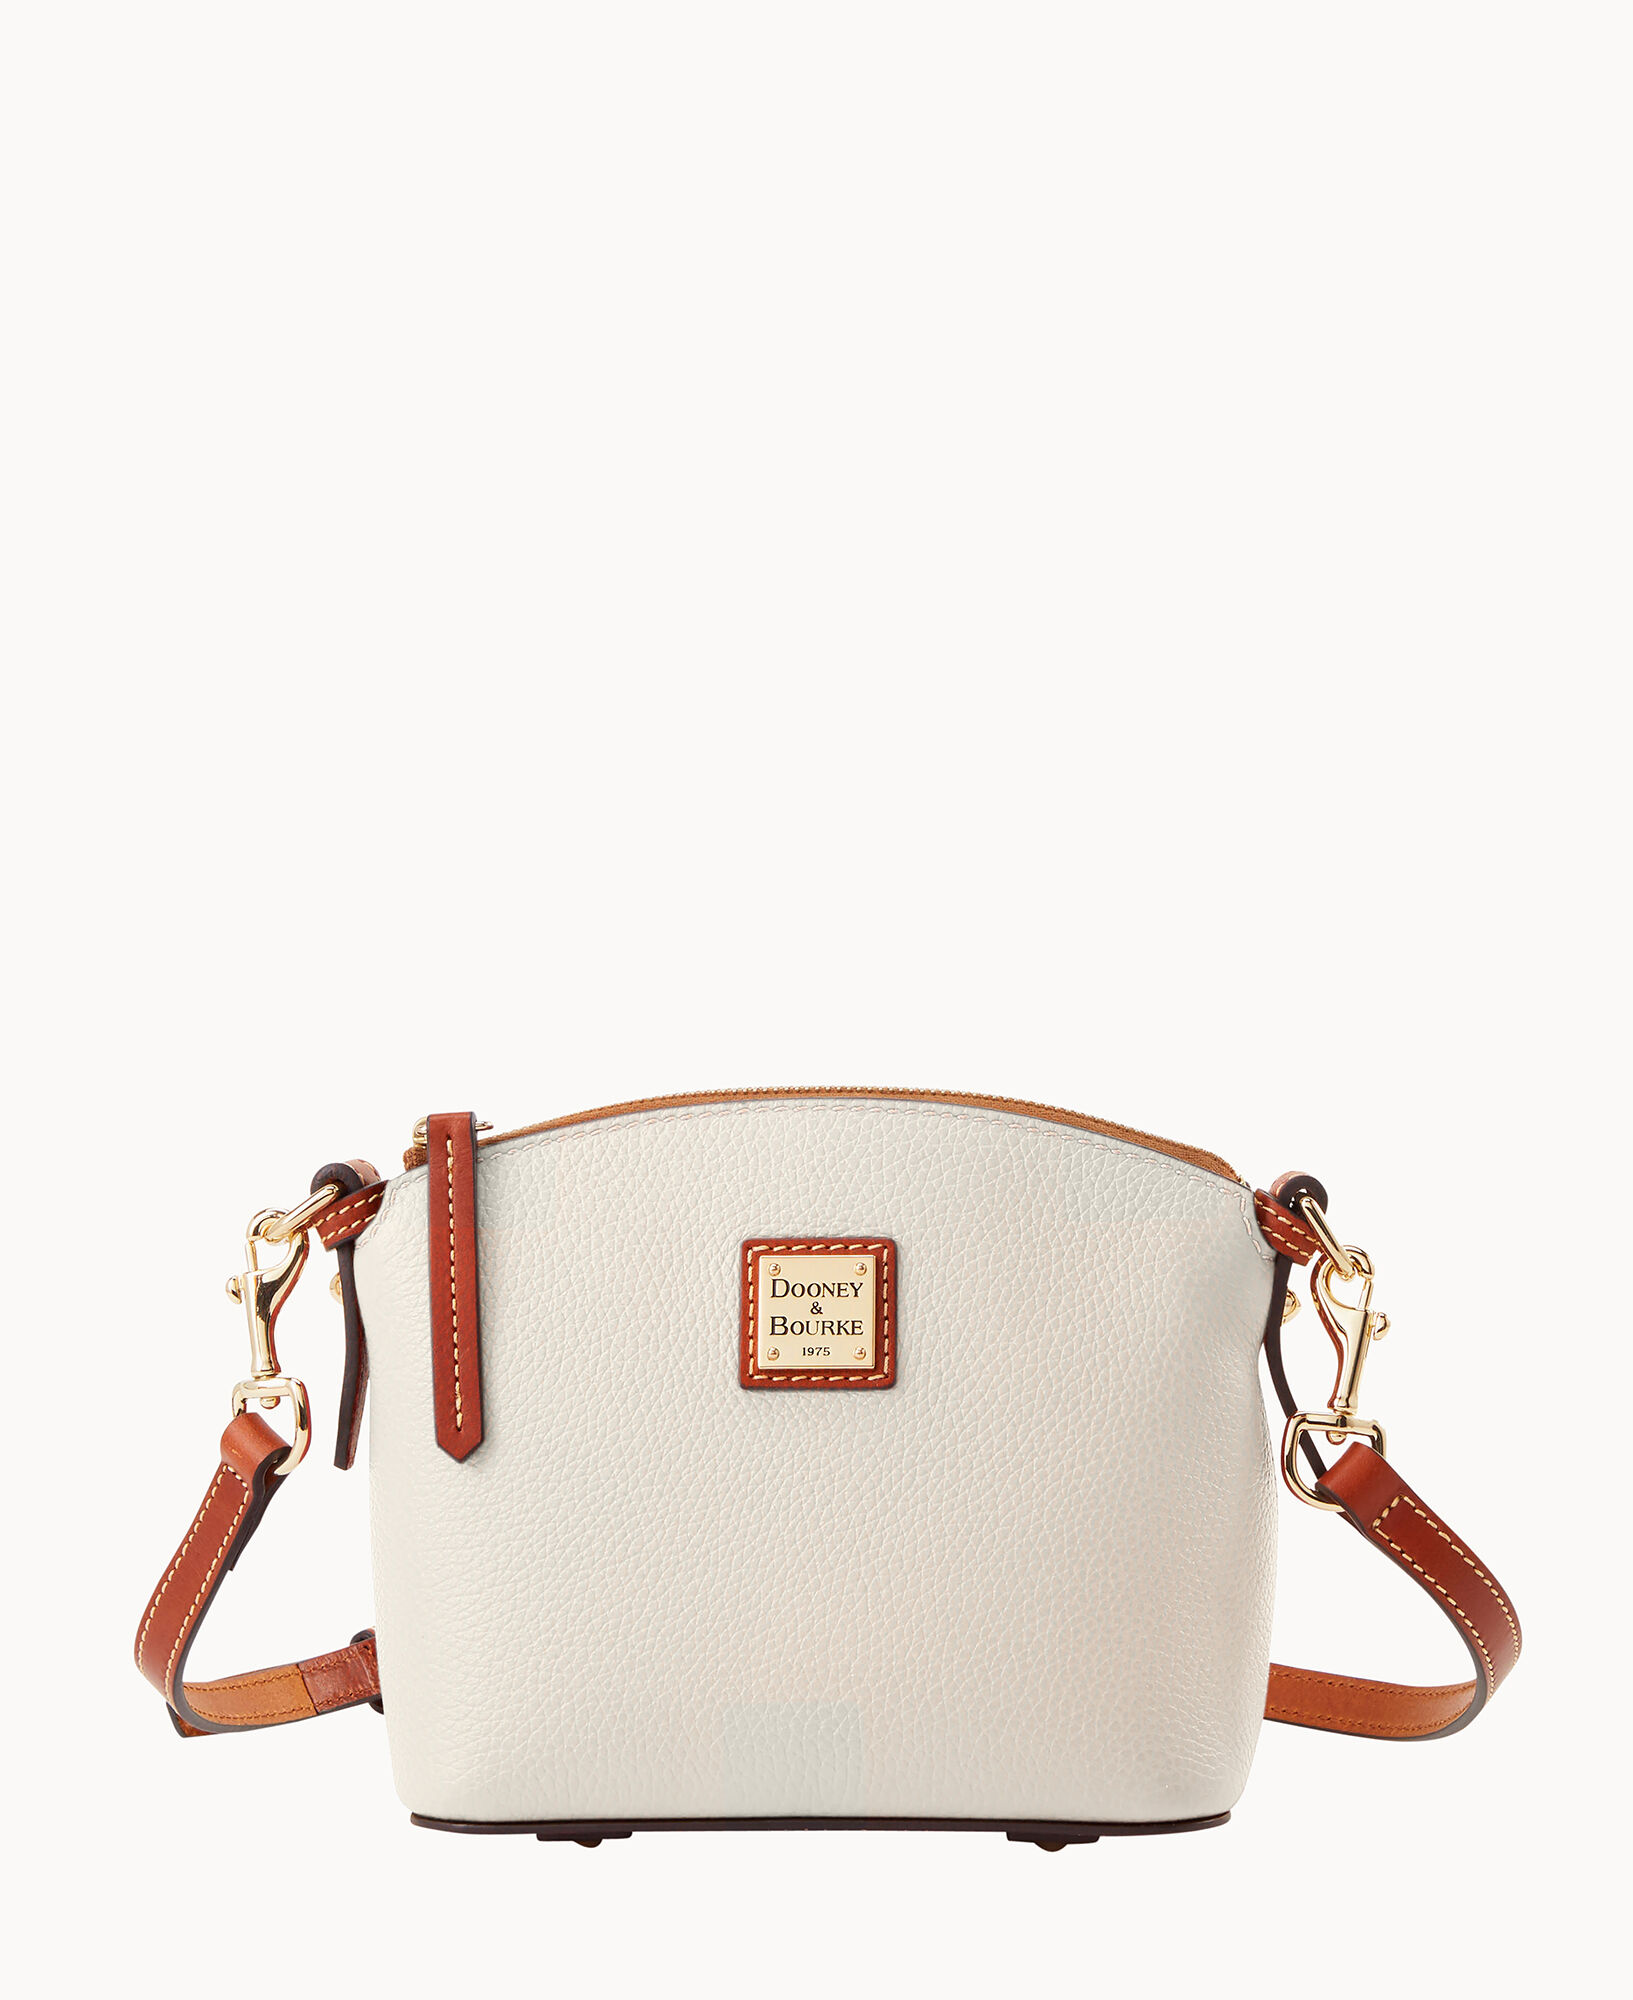 Dooney & Bourke Stripe Mini Domed Crossbody (Navy) Handbags - ShopStyle  Shoulder Bags